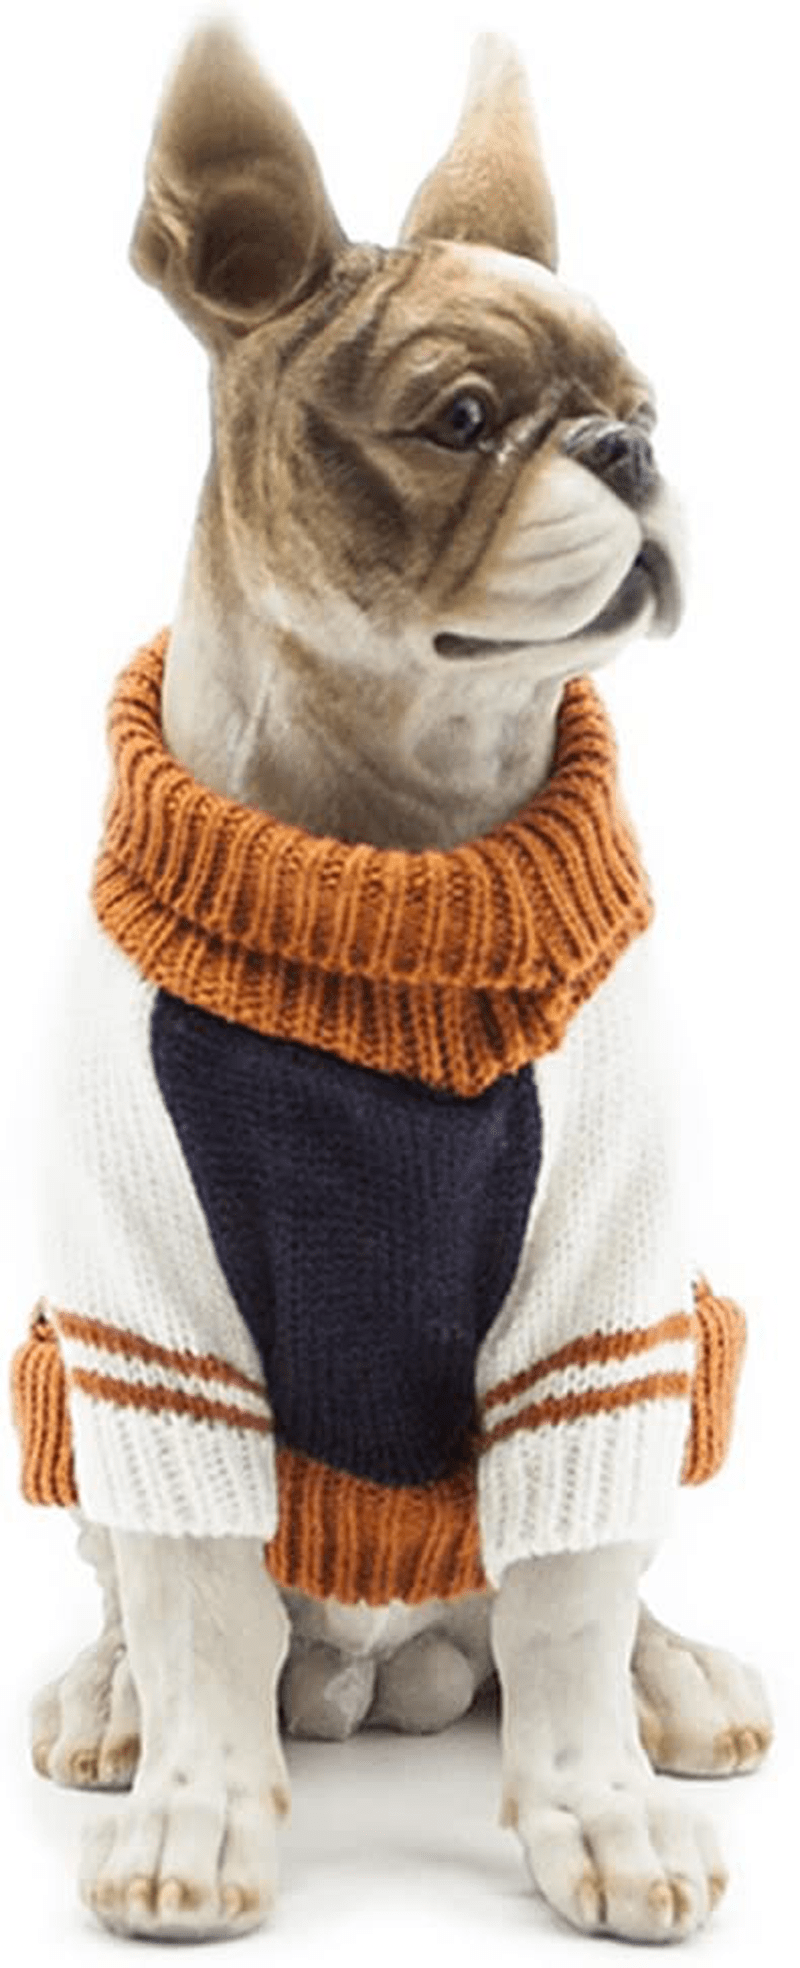 BOBIBI Dog Sweater of the Diamond Plaid Pet Cat Winter Knitwear Warm Clothes,Orange,Small